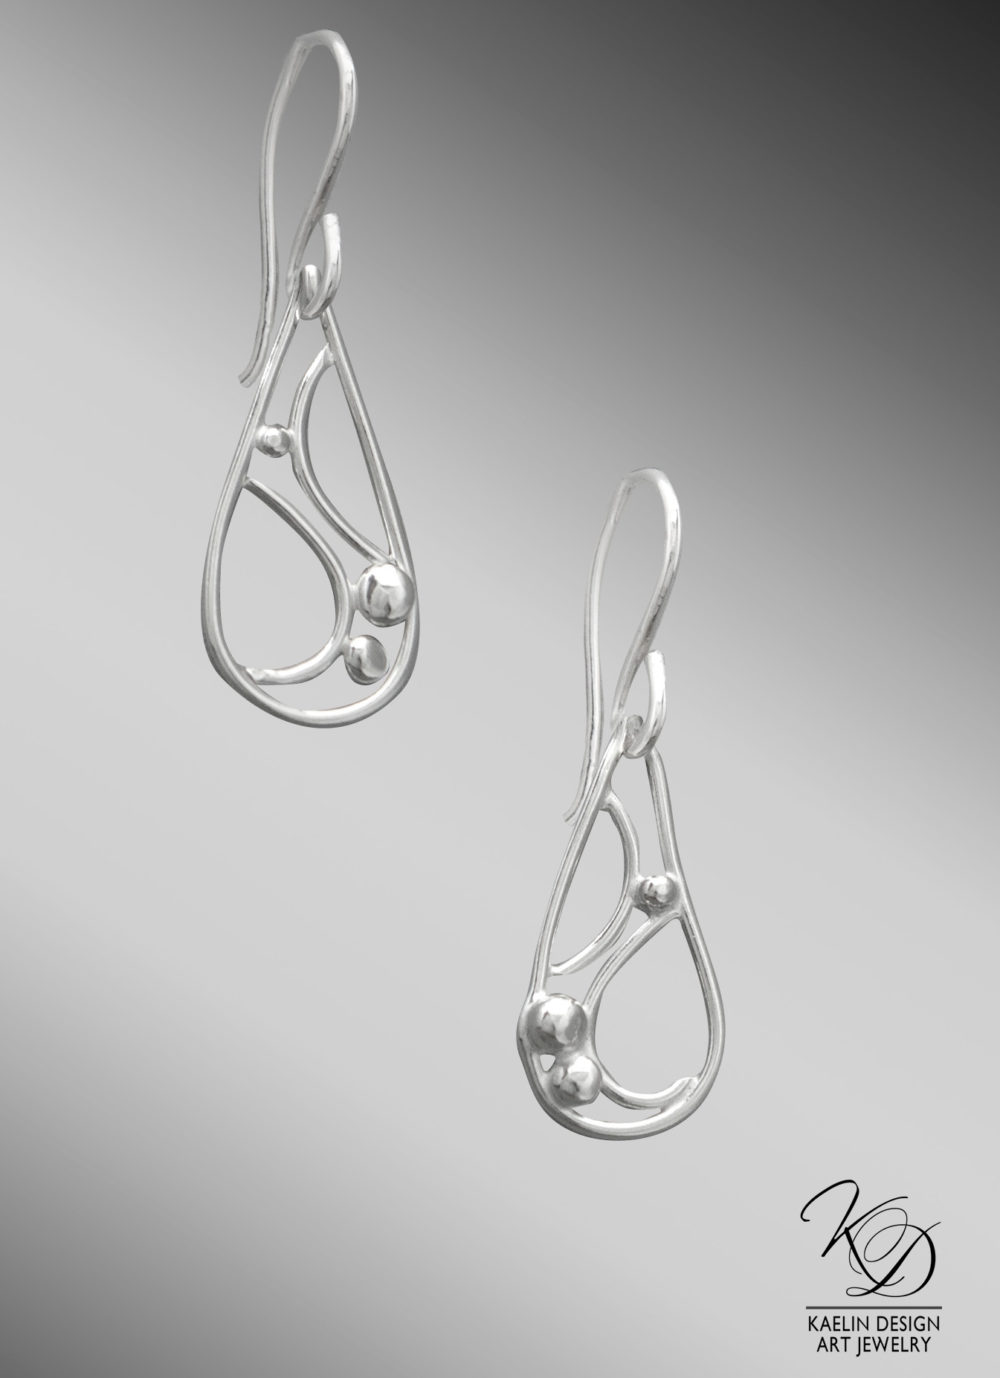 Rippling Currents Ocean Inspired Silver Earrings by Kaelin Design